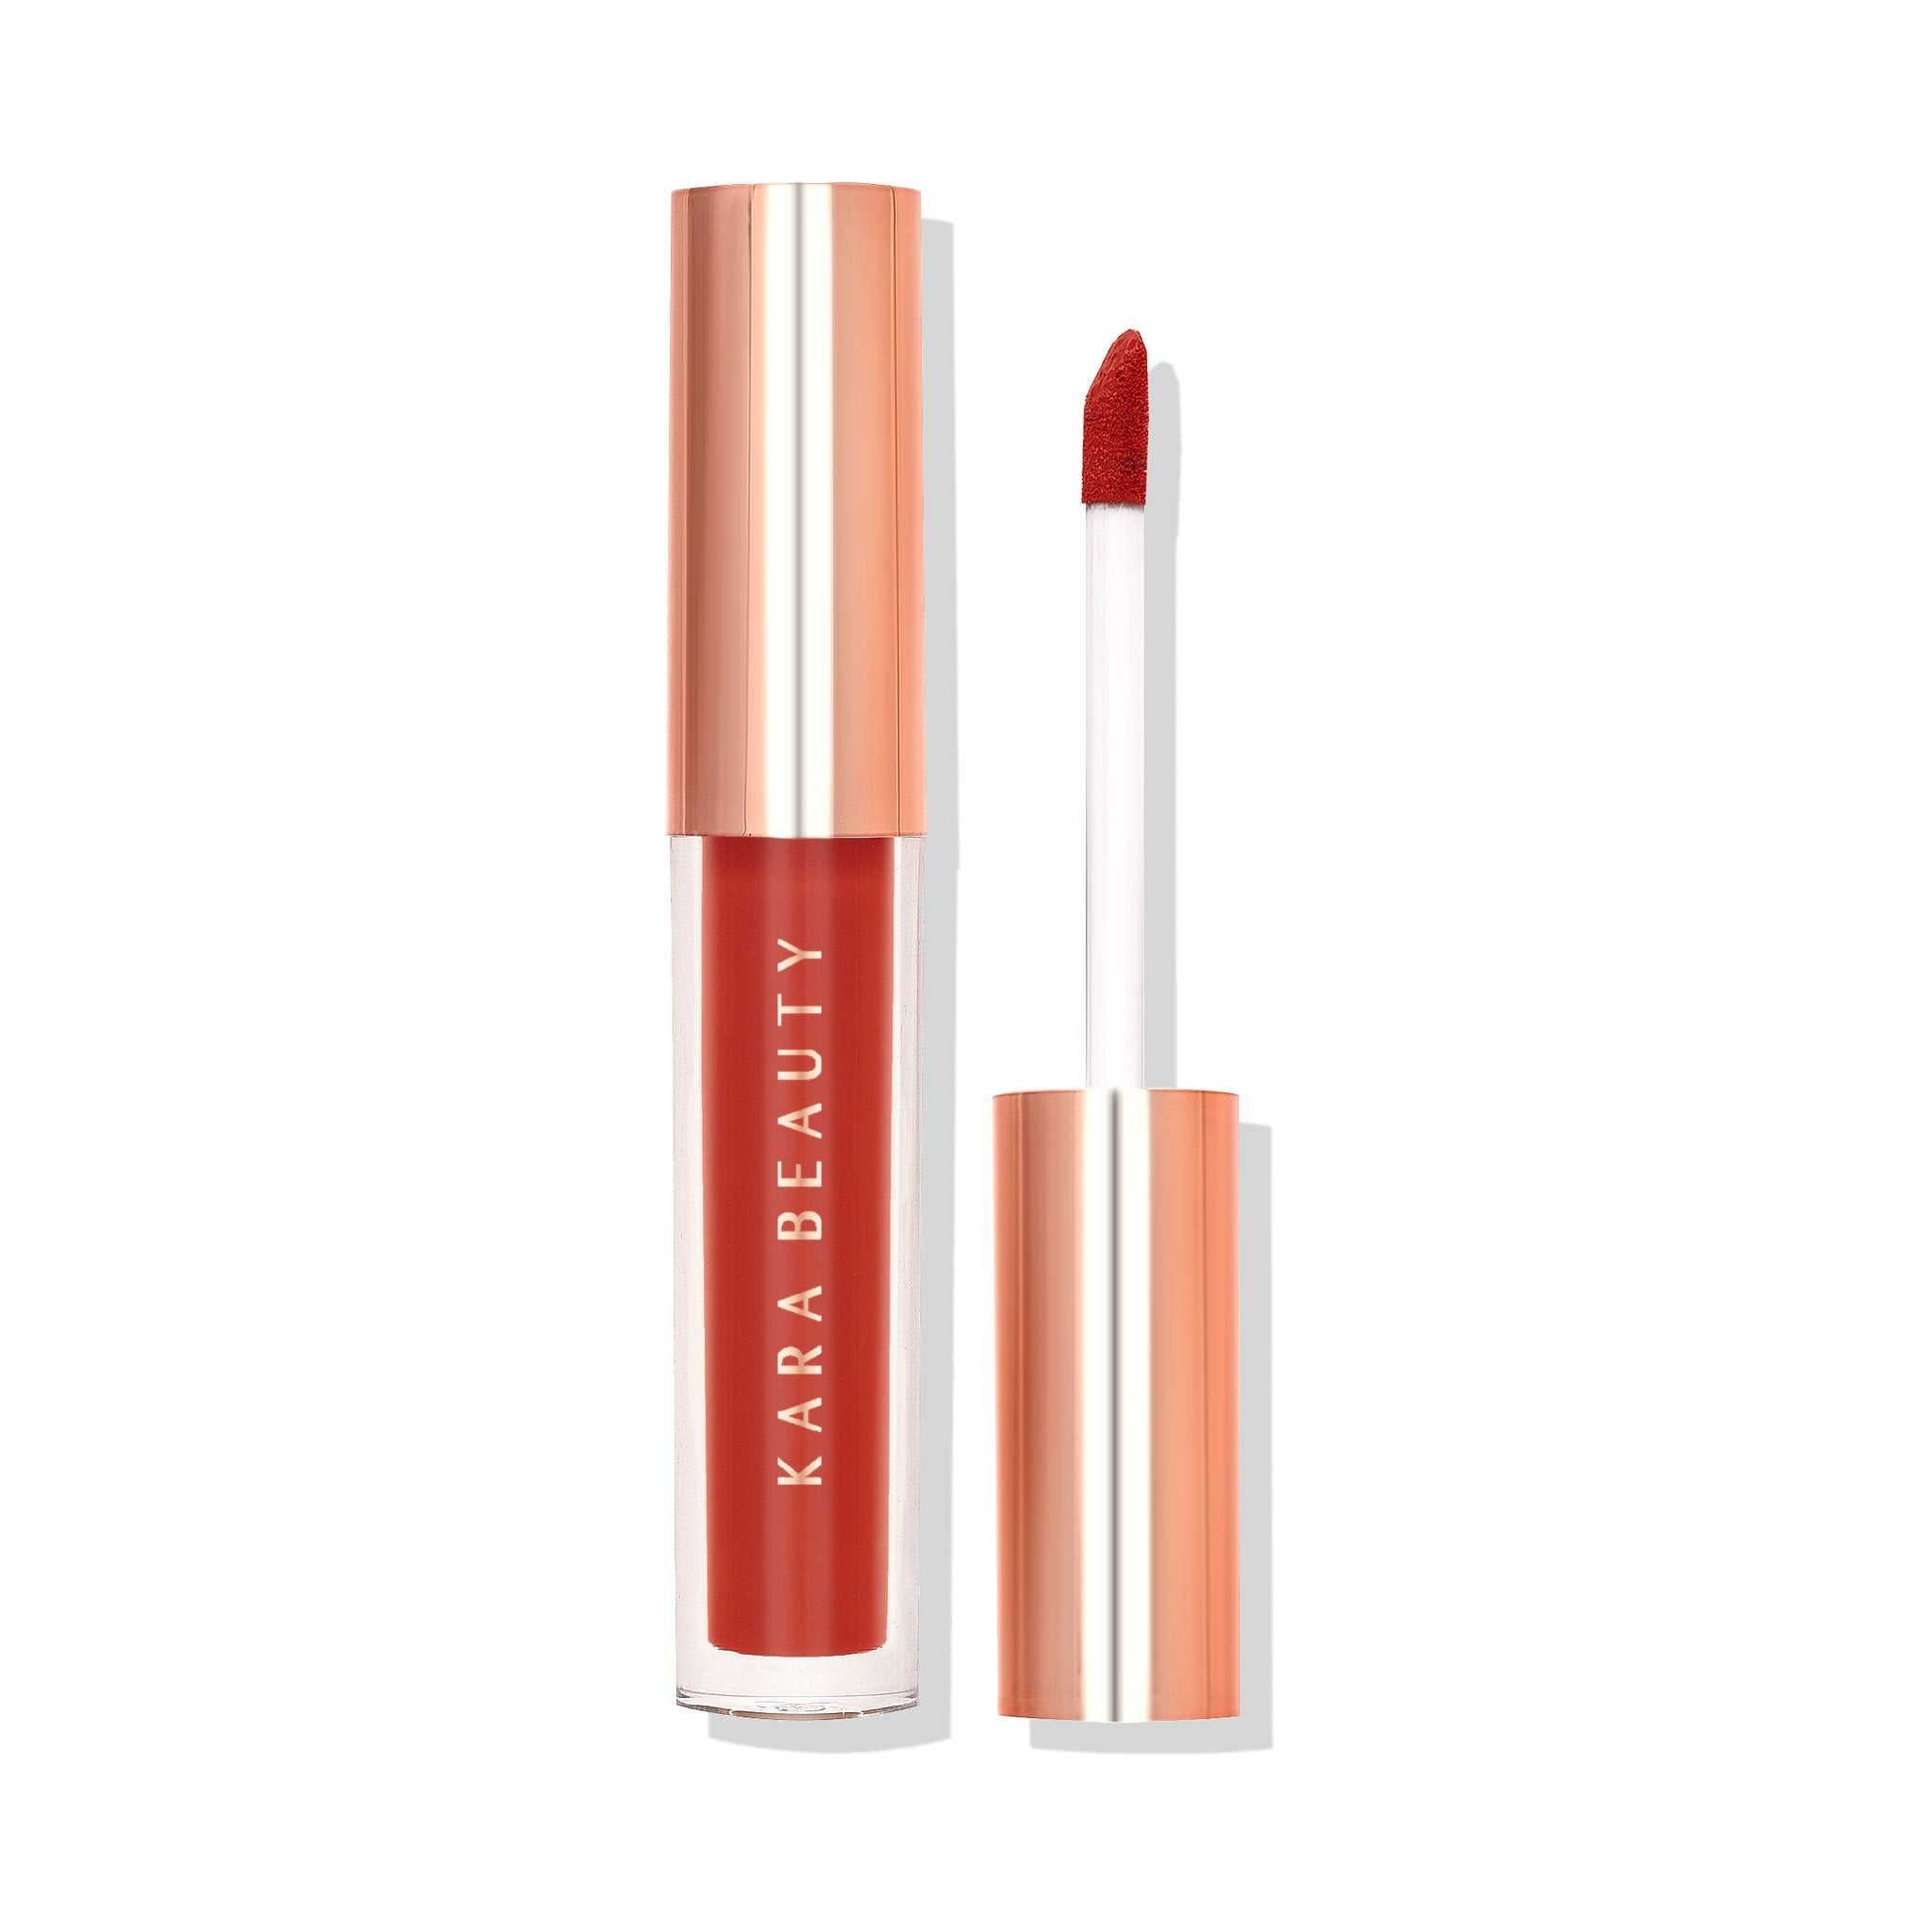 Romance bright red liquid lipstick